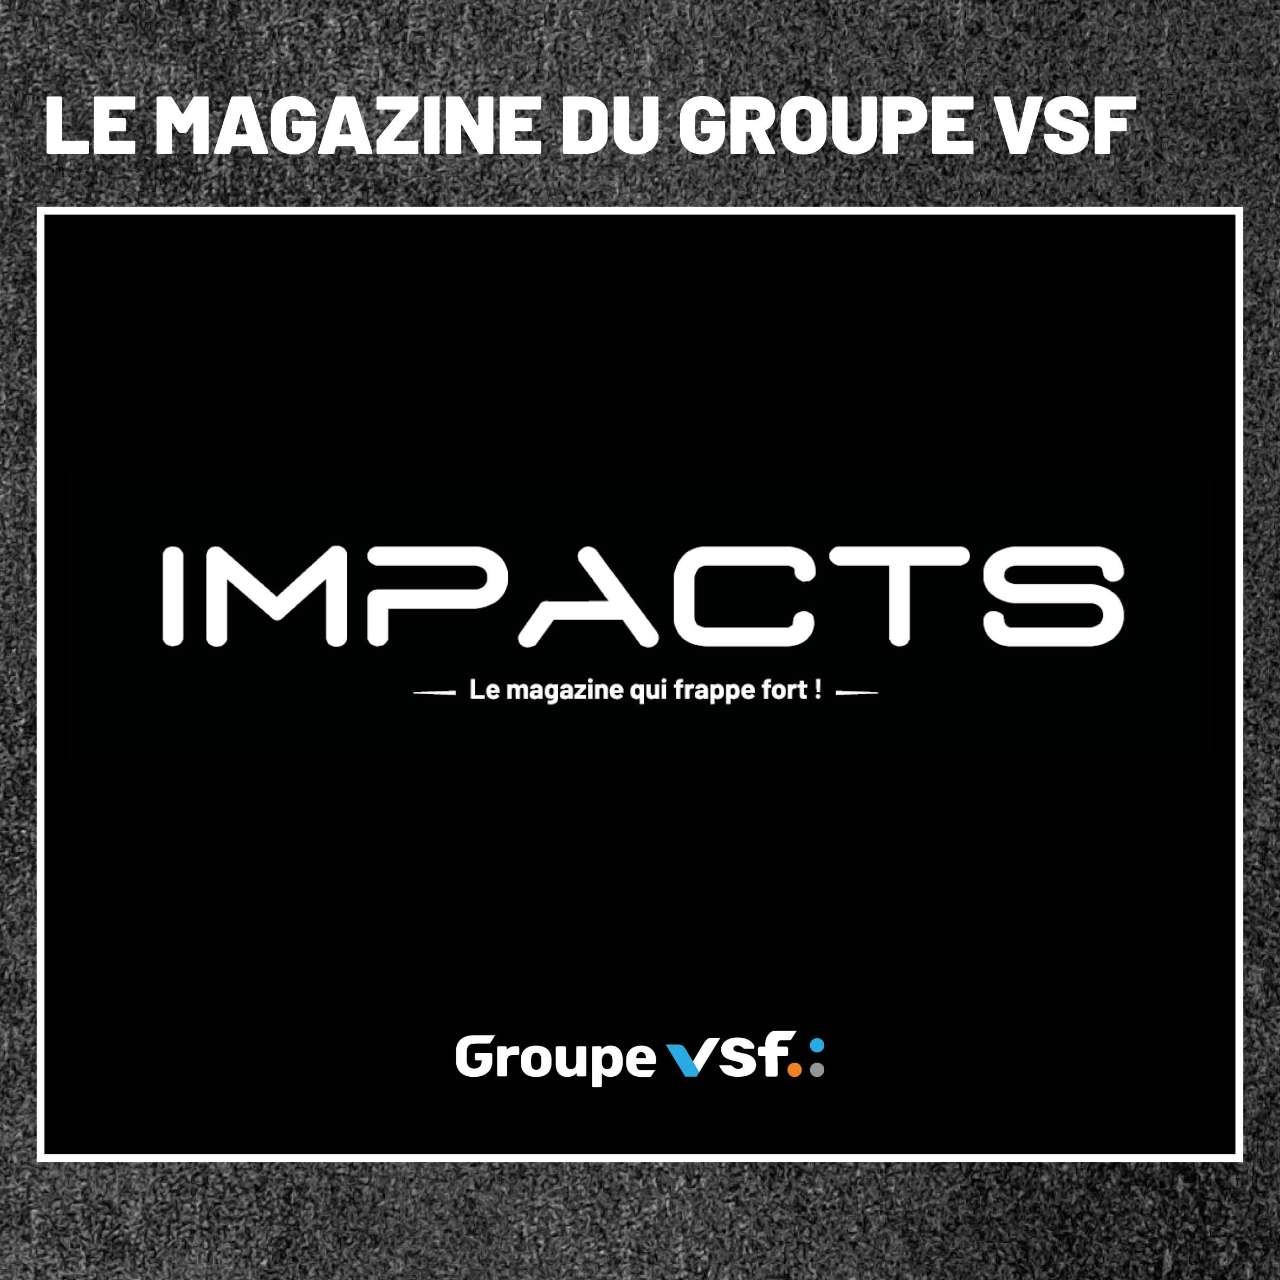 Impacts : le magazine du groupe VSF